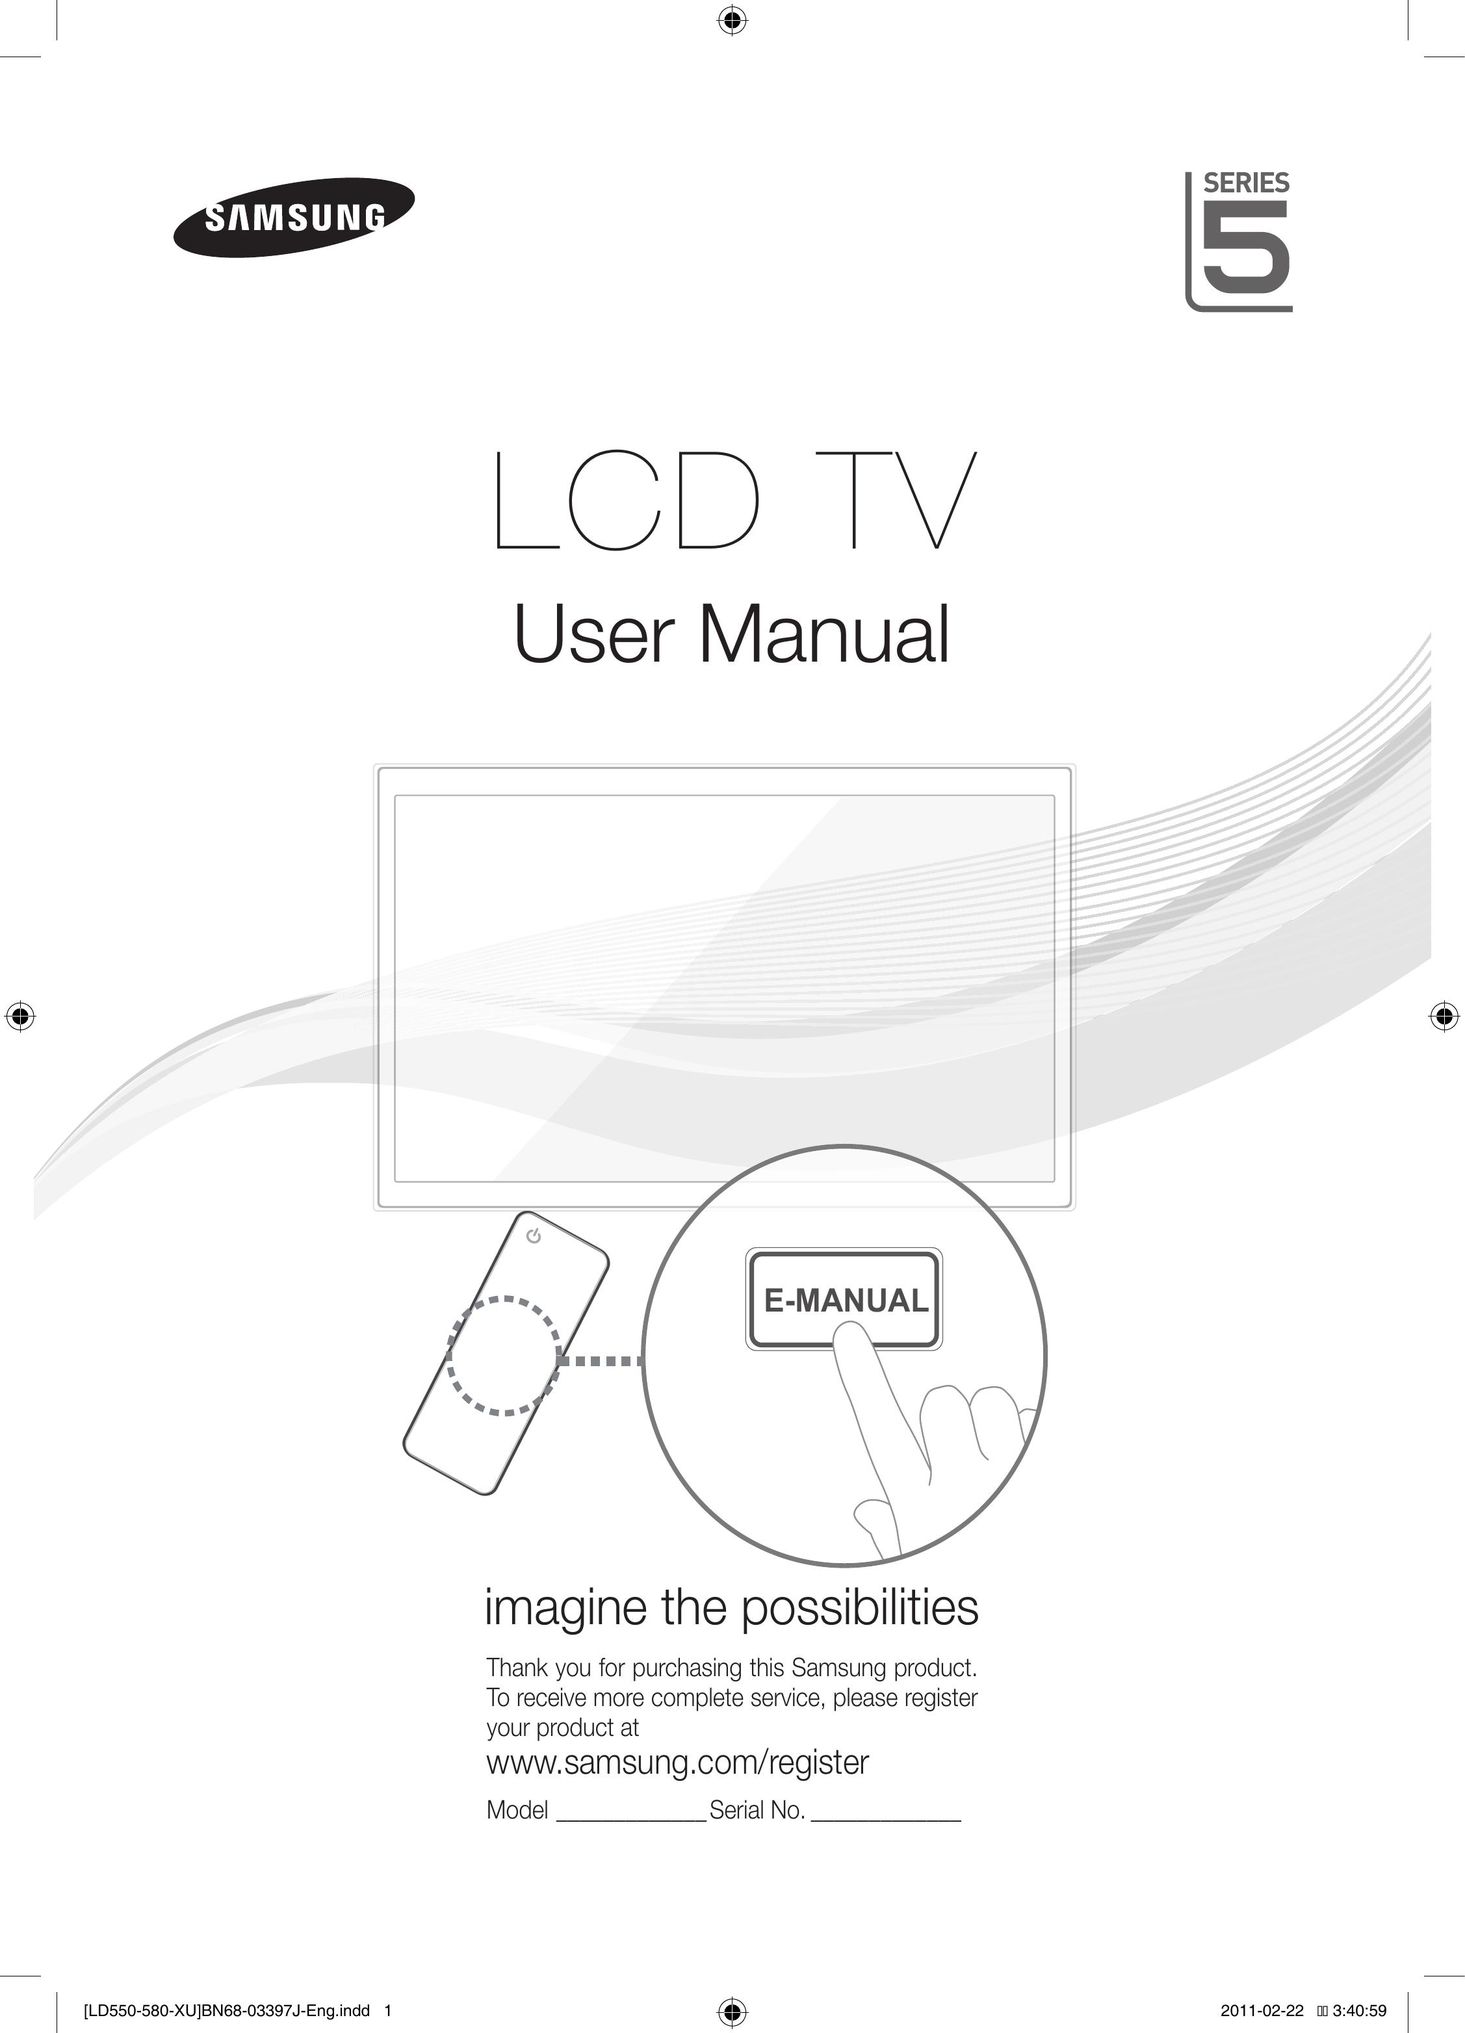 Samsung Series 5 Car Satellite TV System User Manual